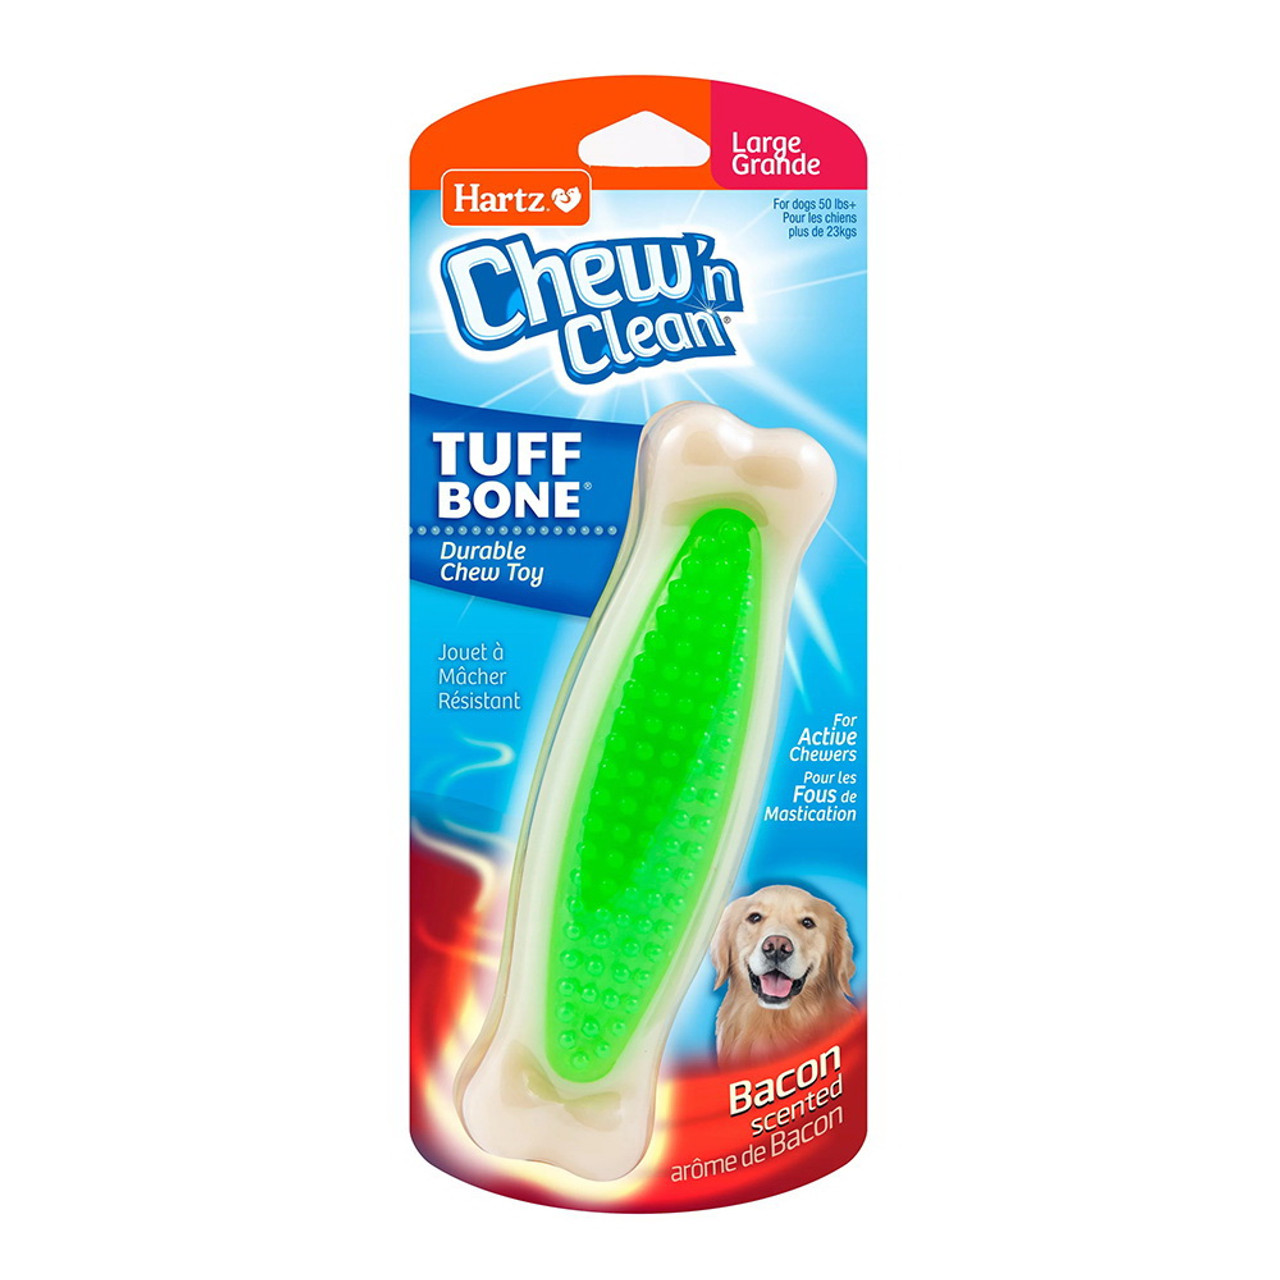 HARTZ Chew 'n Clean Dental Duo Dog Treat & Chew Toy, Large, 1